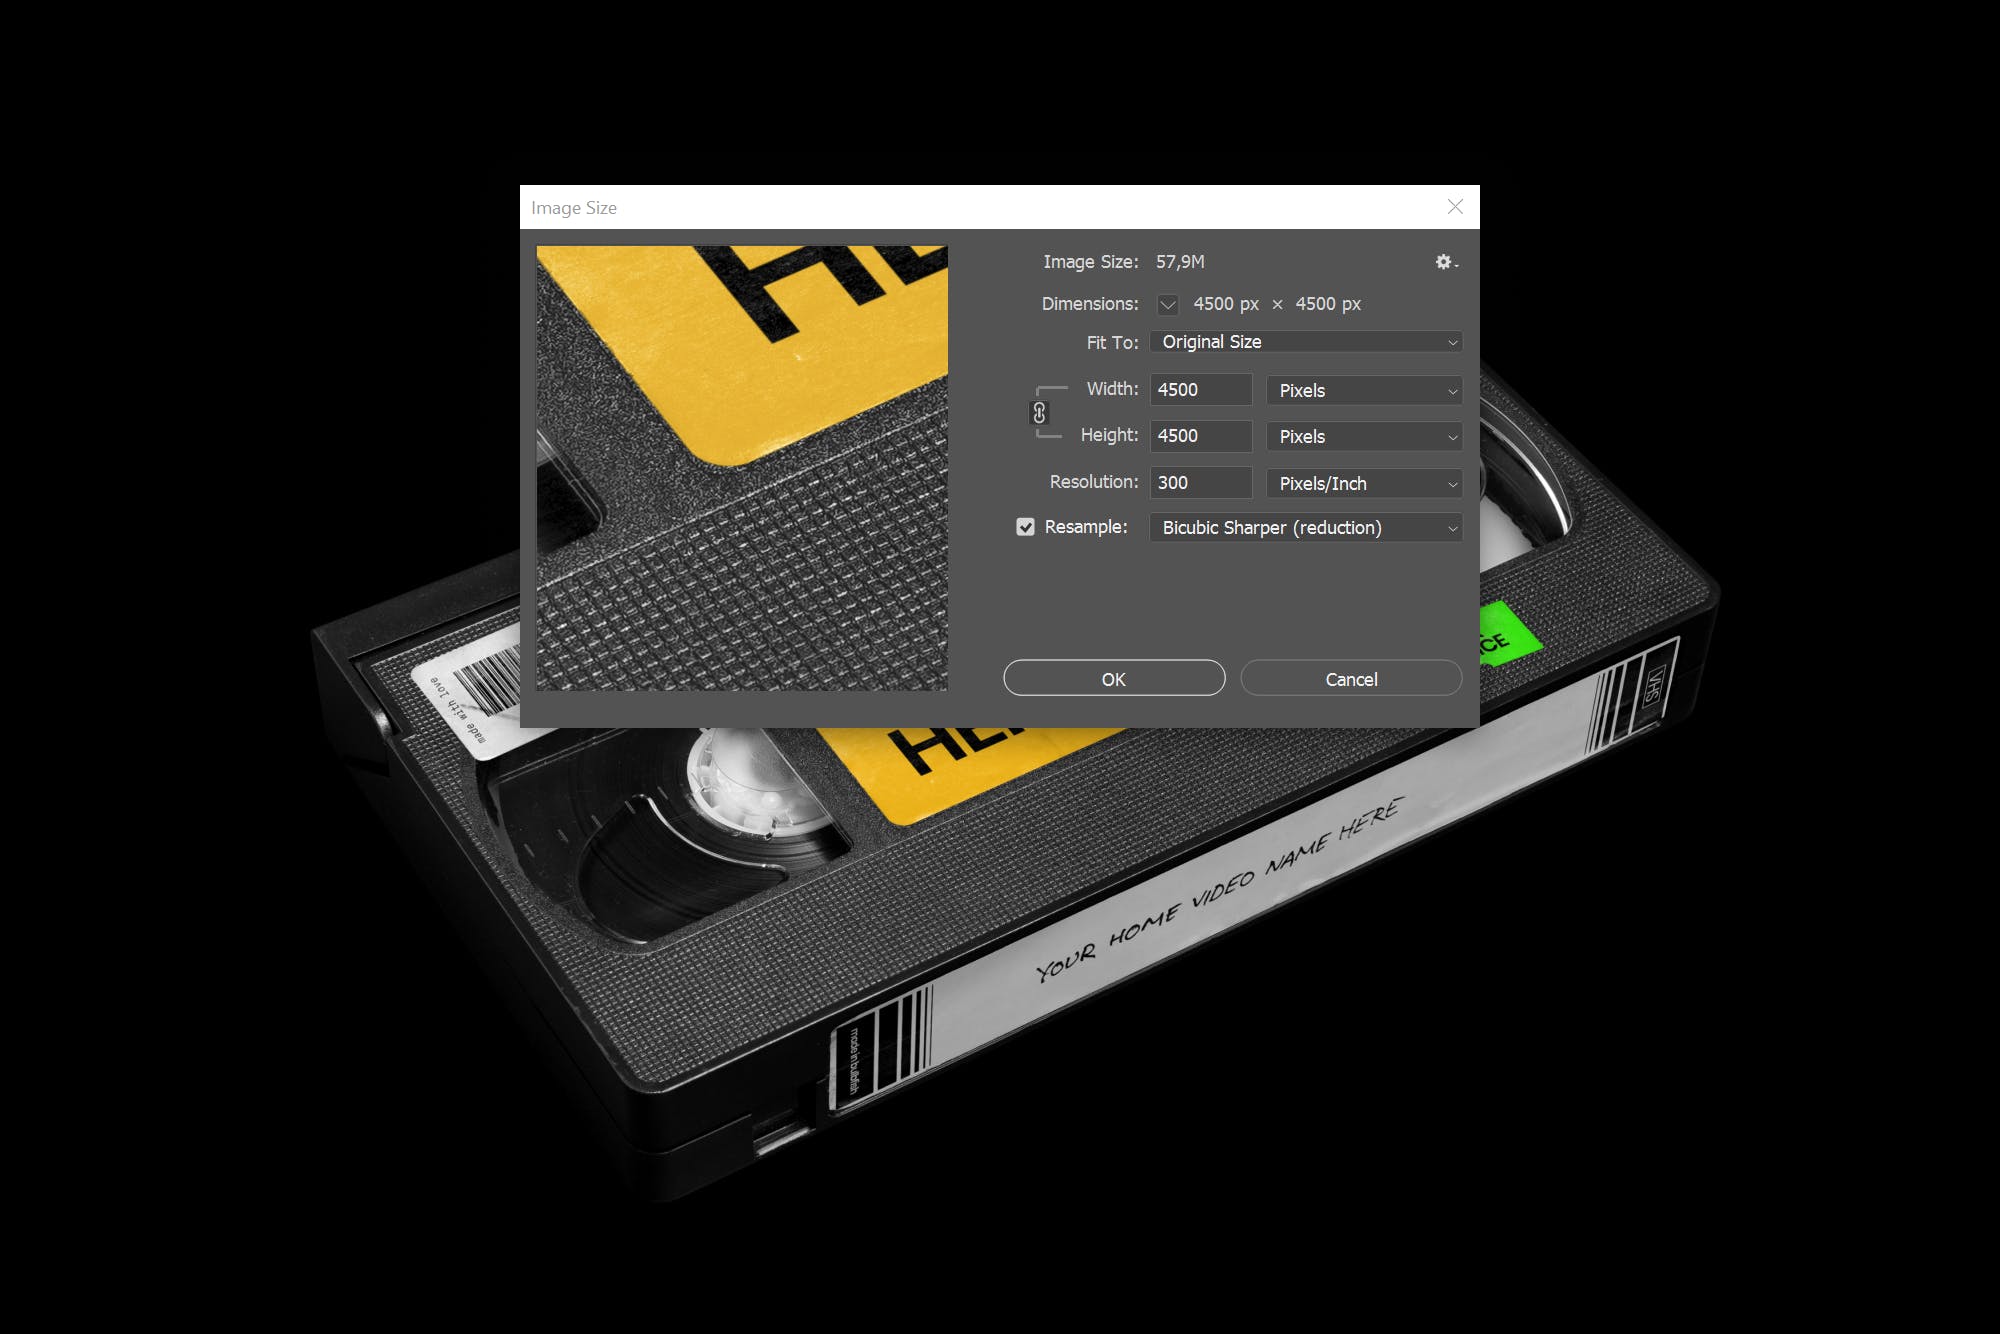 VHS磁带设计效果图第一素材精选样机 VHS Cassette Mockup插图(5)